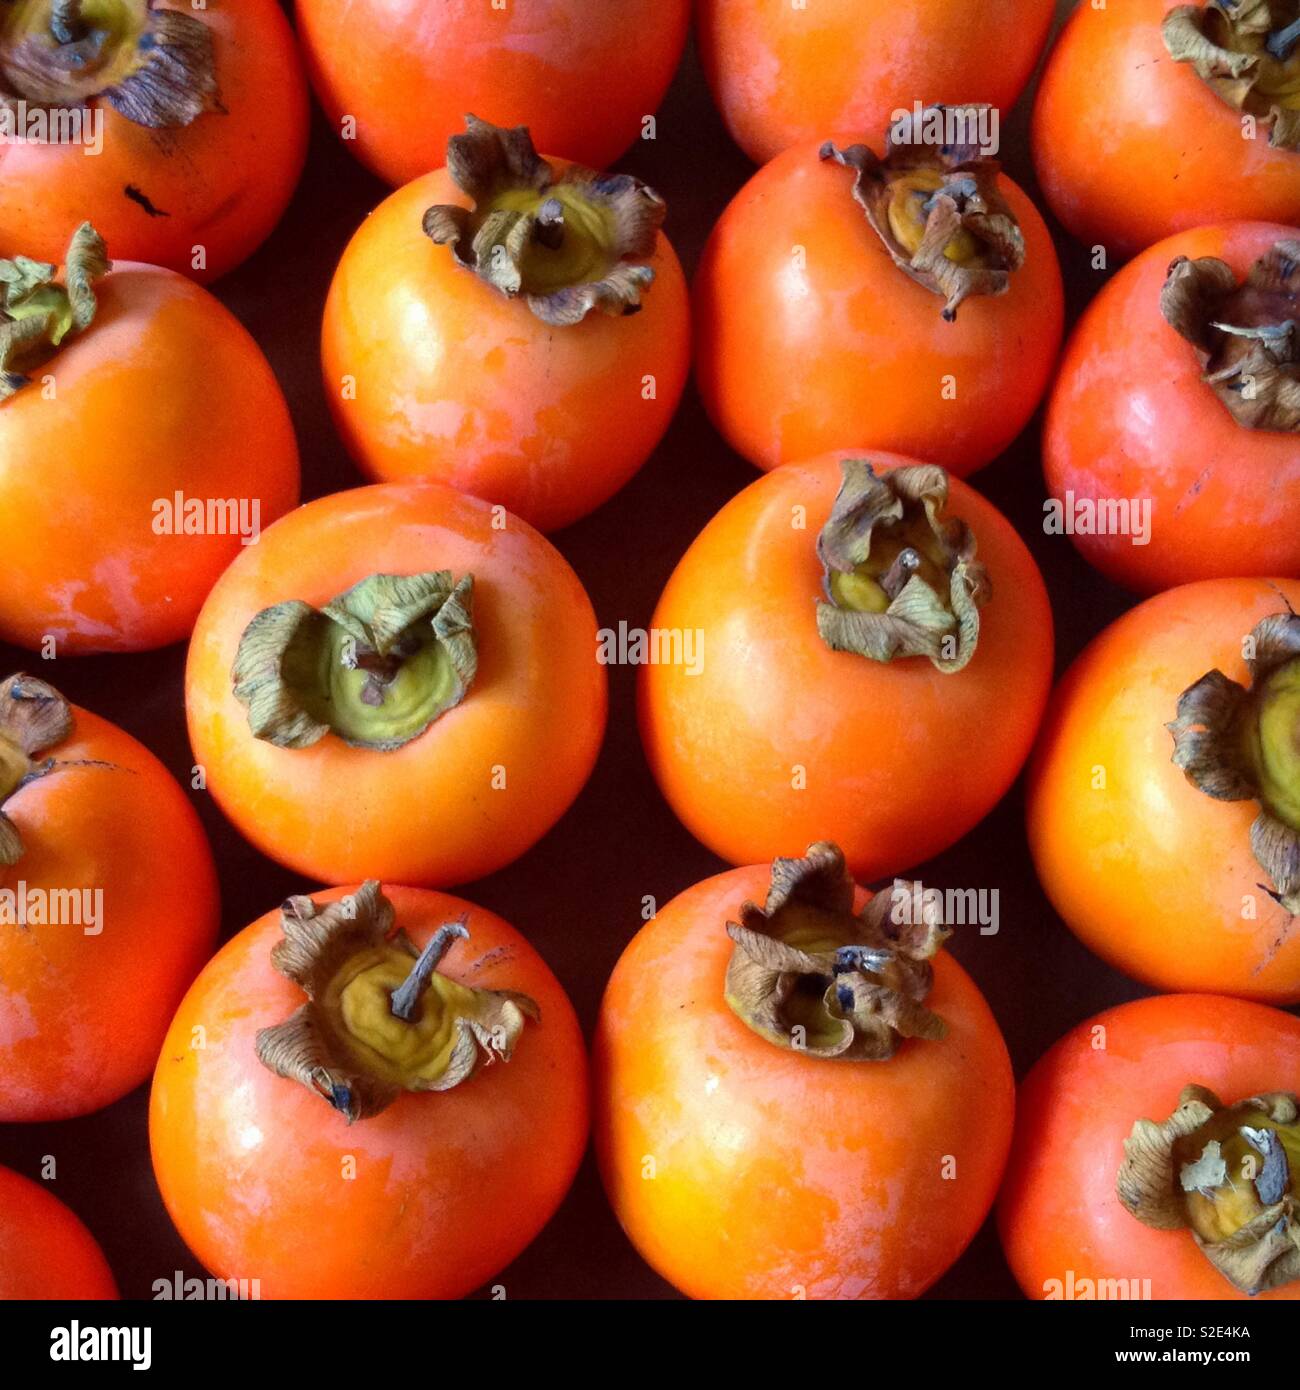 Fruit of persimmon Stock Photo